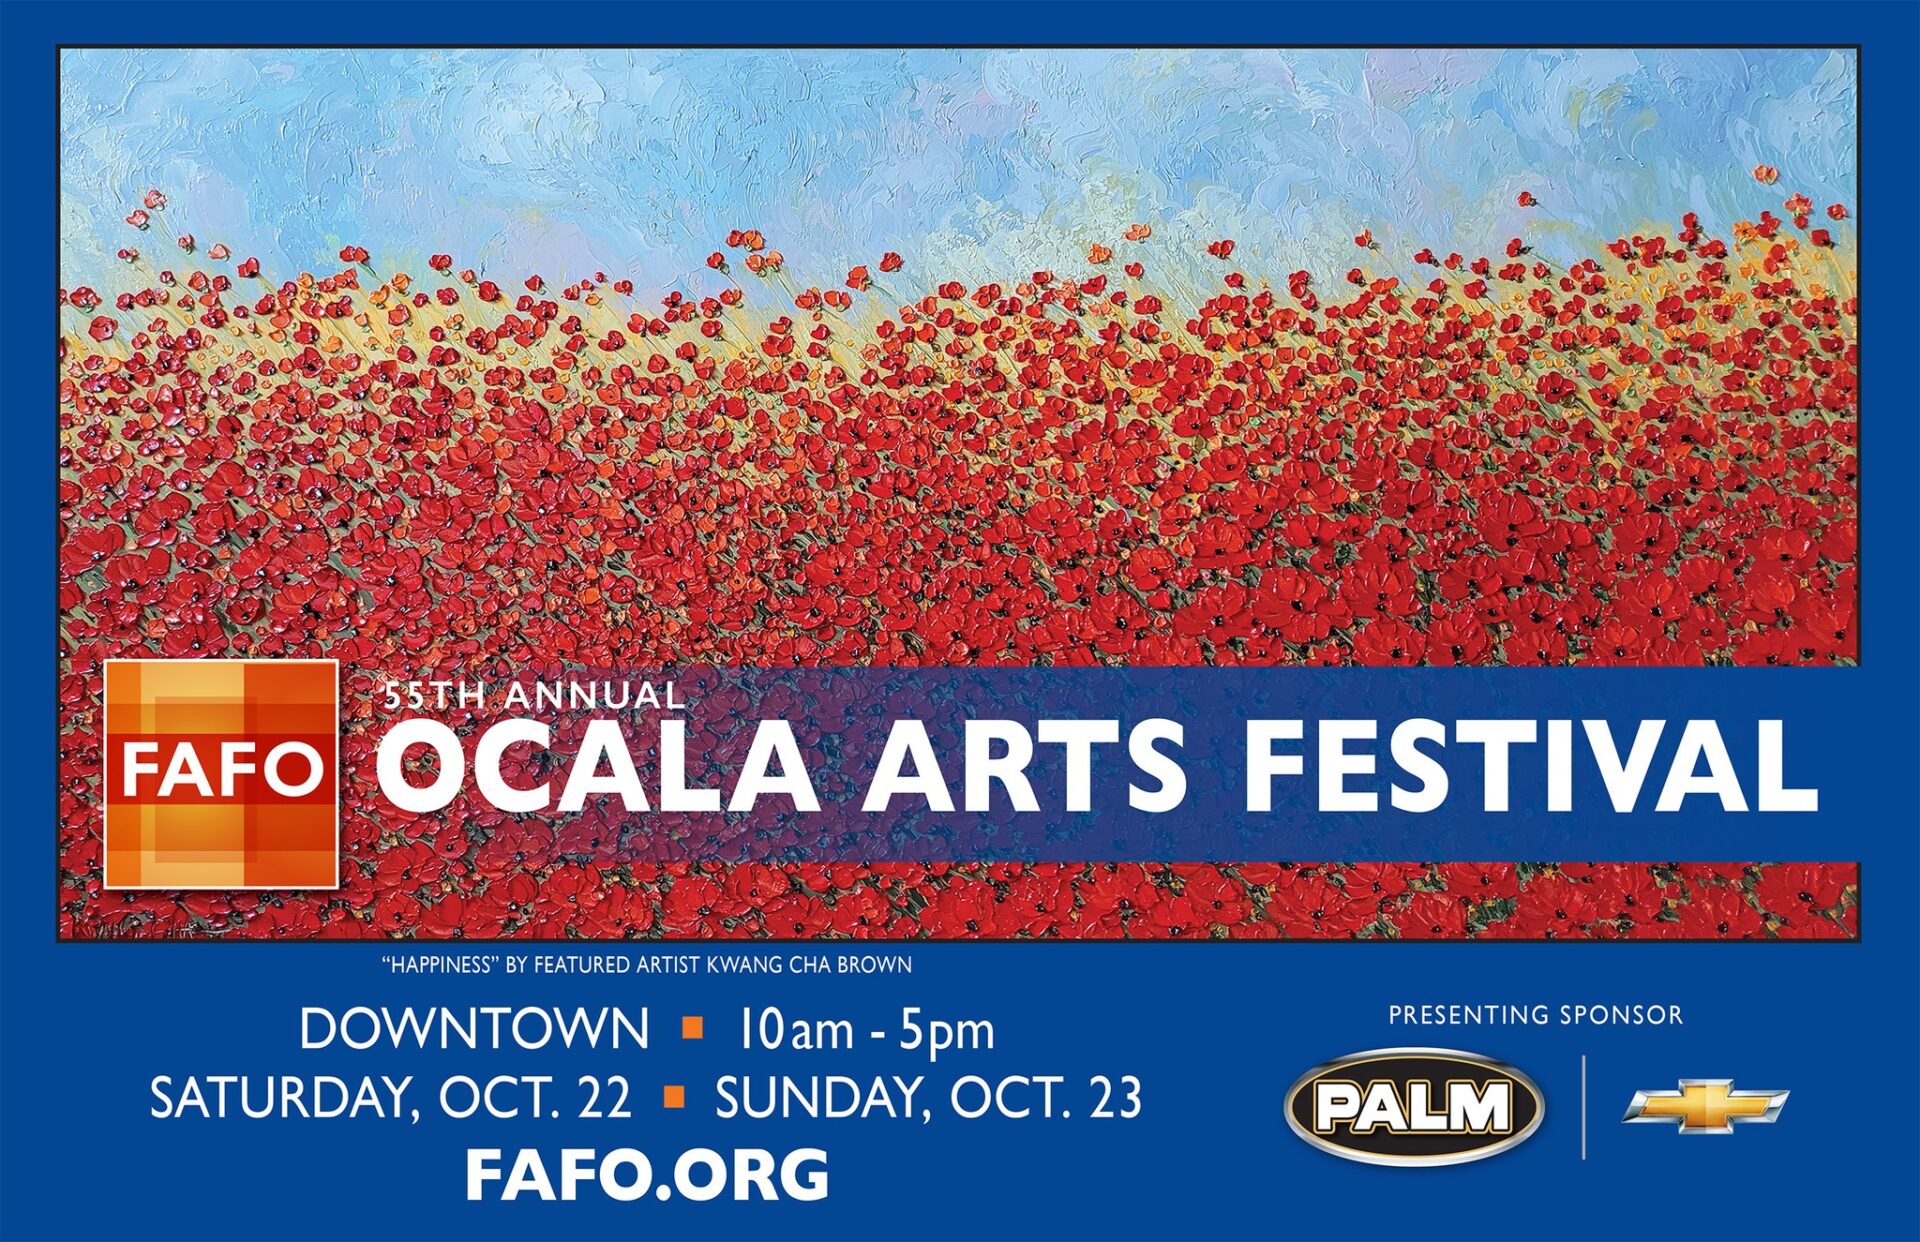 Artists needed for Ocala Arts Festival, deadline approaching Ocala